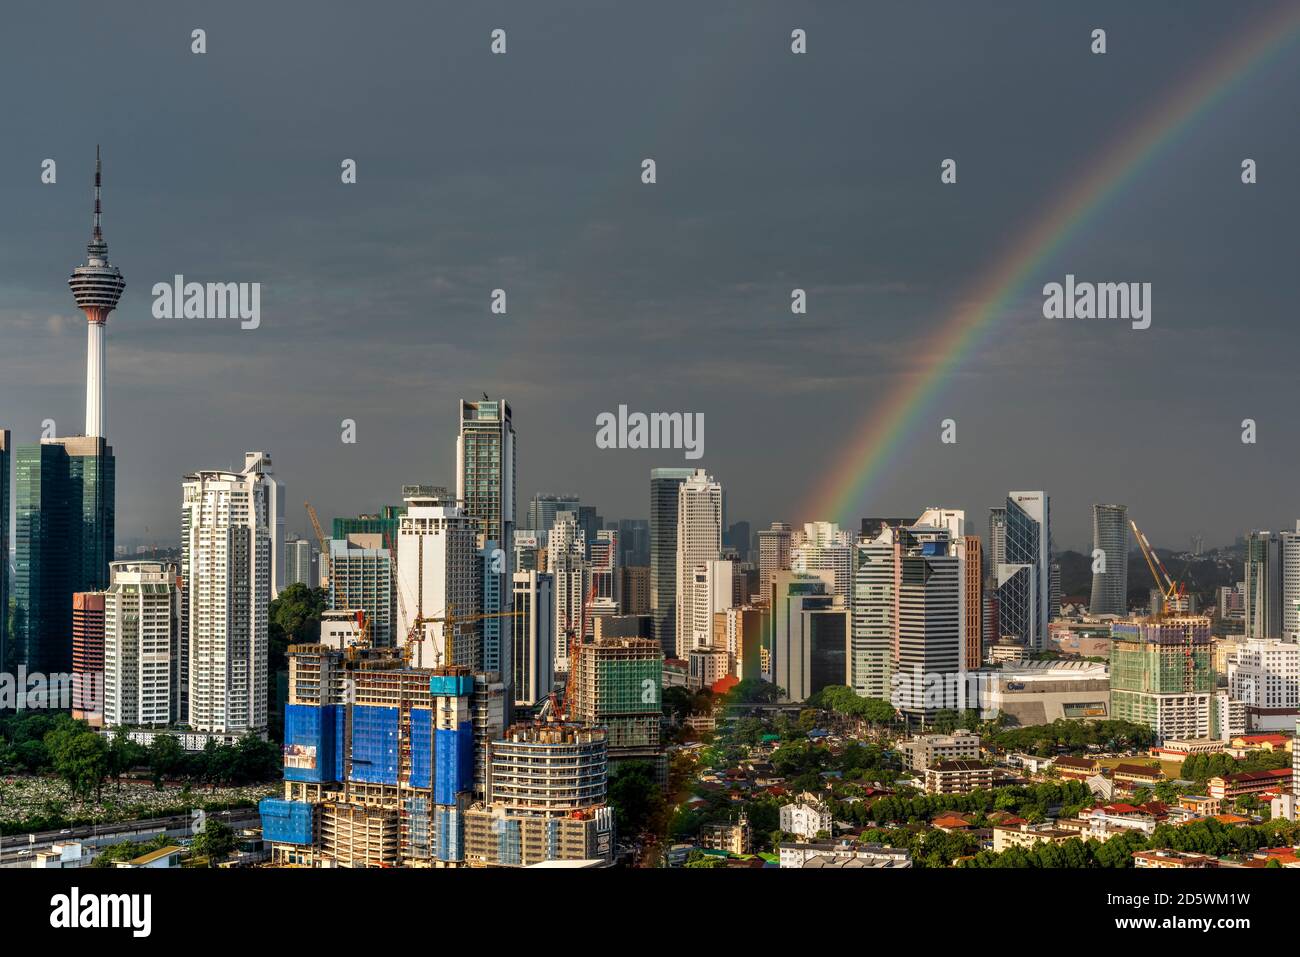 City skyline with rainbow in a stormy sky, Kuala Lumpur, Malaysia Stock Photo